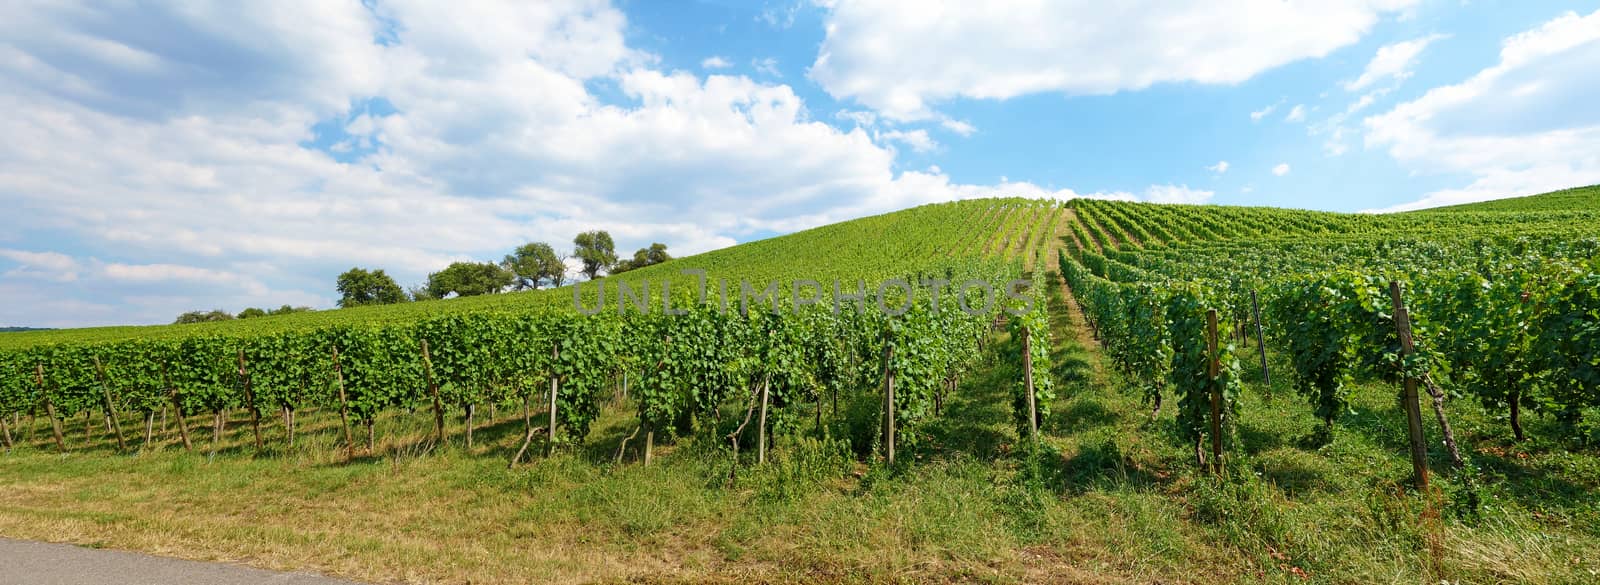 Vineyard panorama with blue cloudy sky